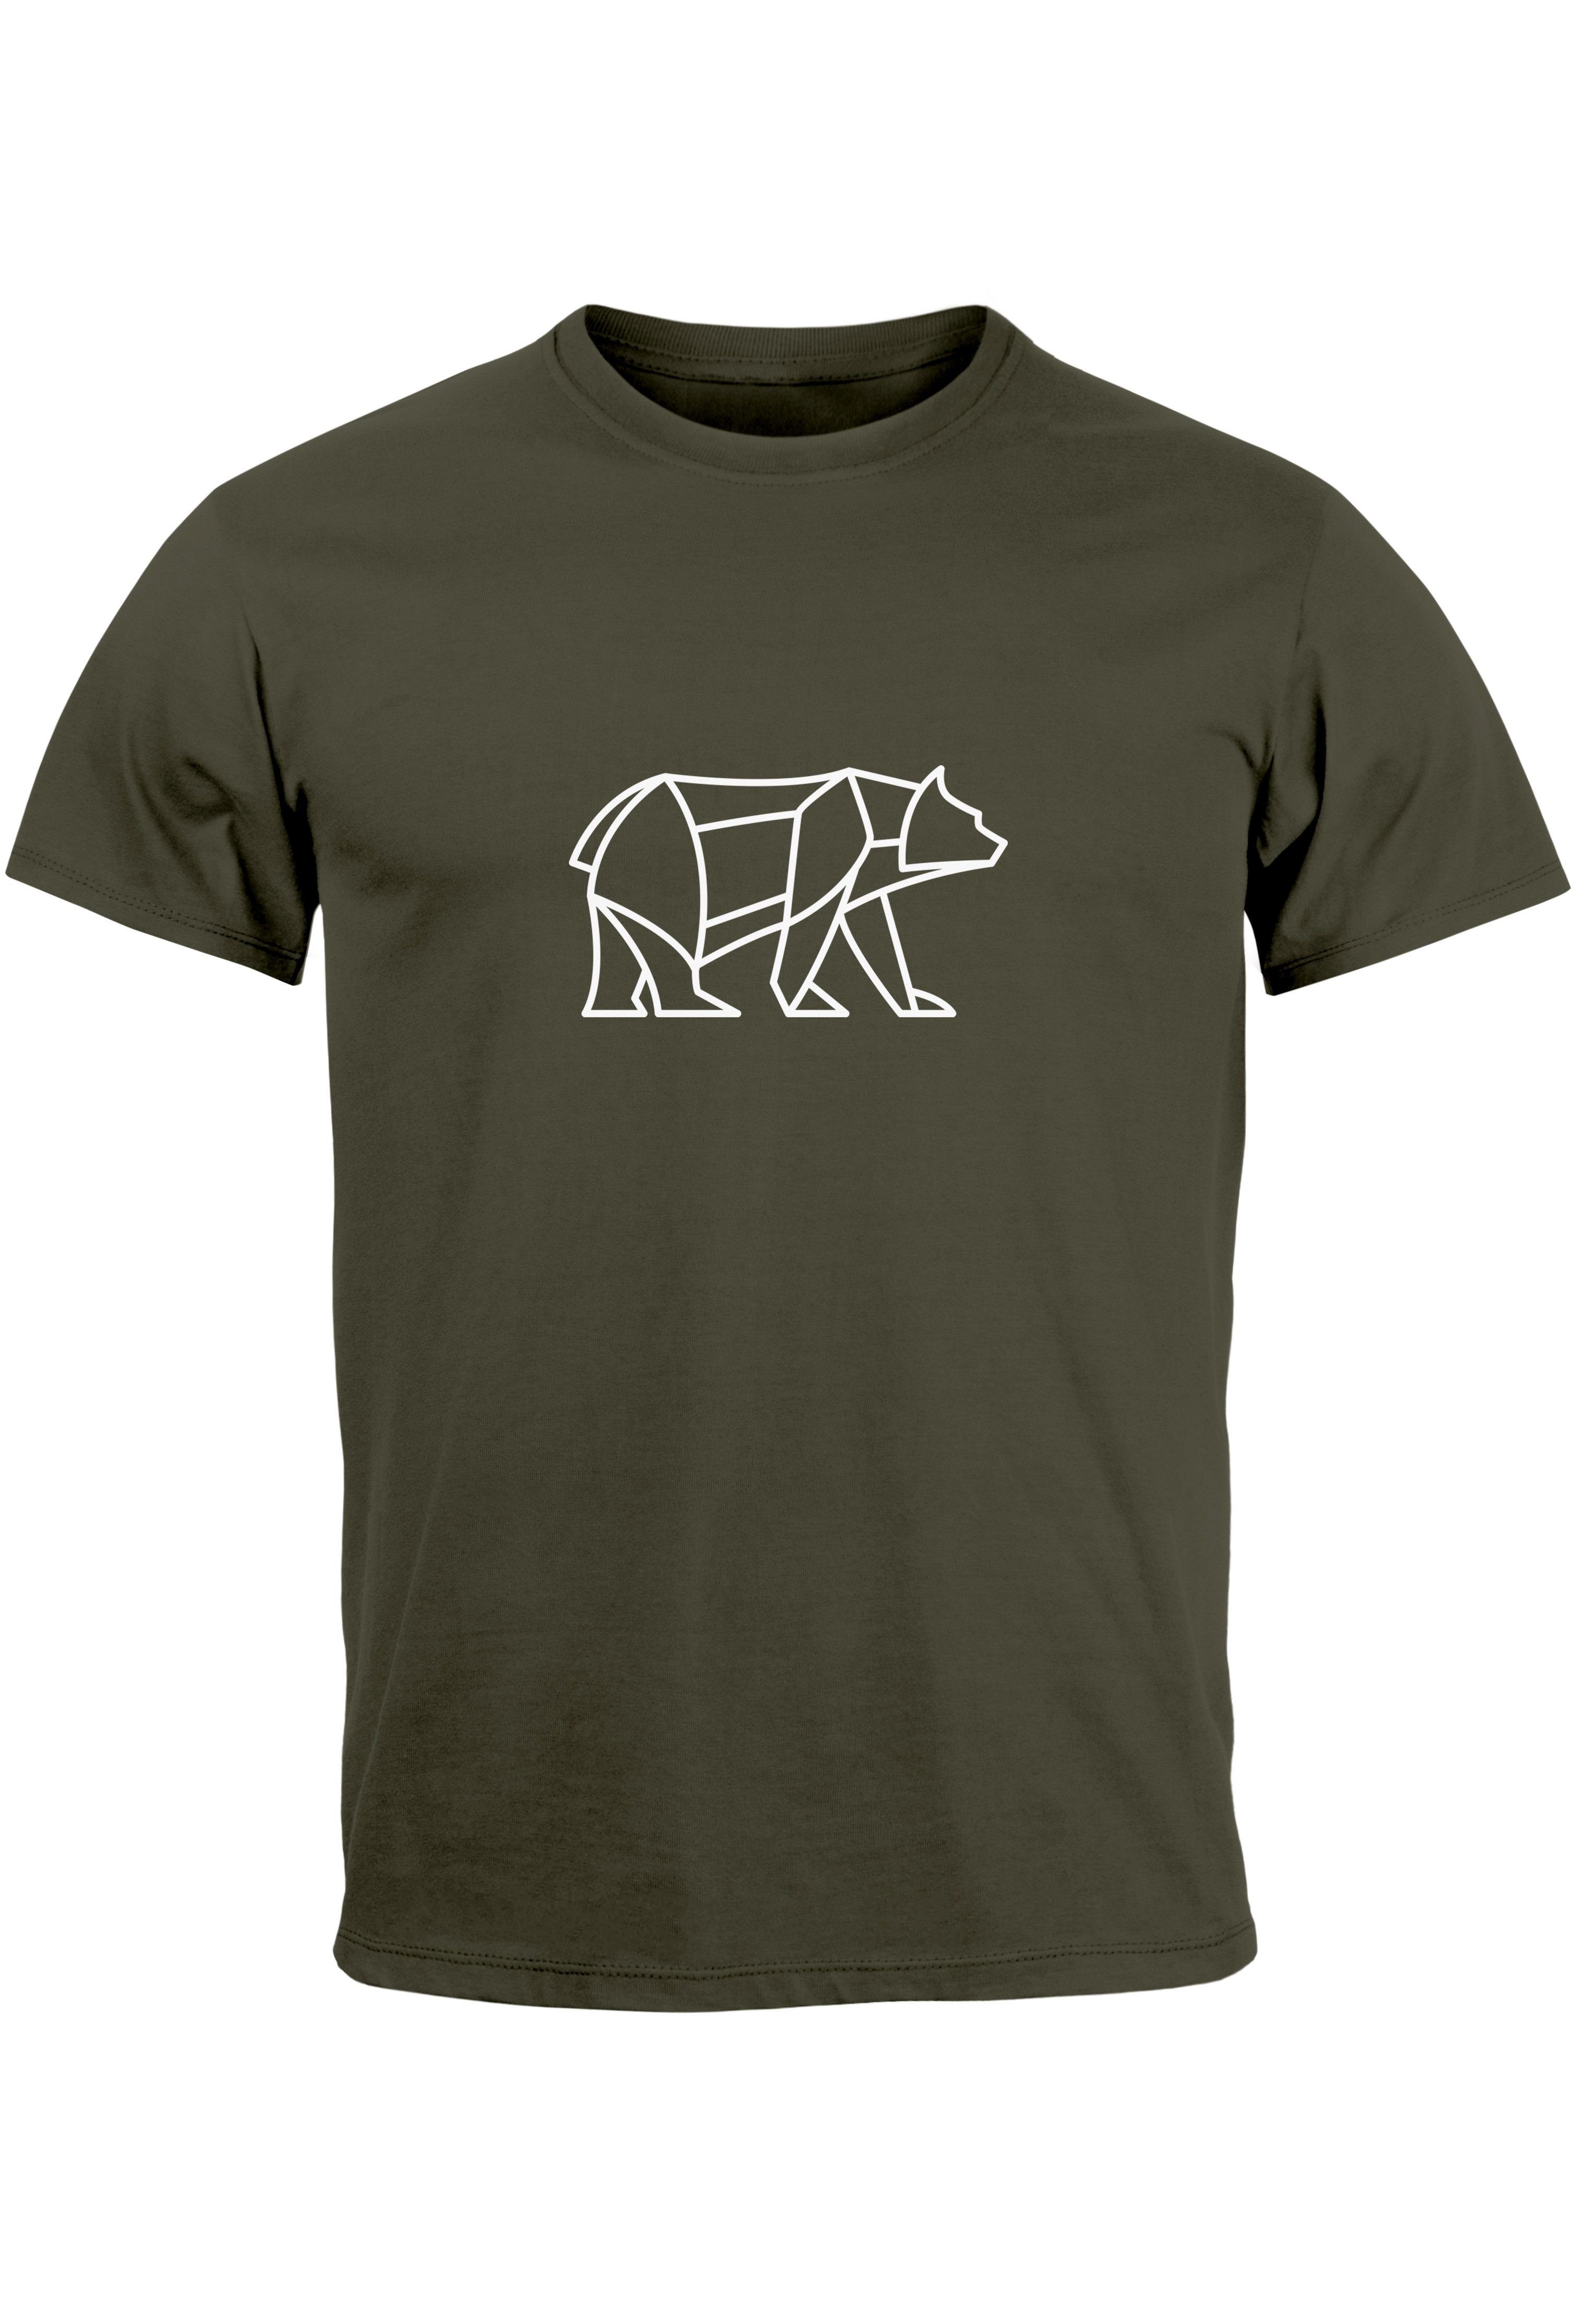 Tiermotiv Fashion 2 Neverless Polygon Bear Print-Shirt Outdoor mit Print grün Print T-Shirt Herren Polygon Design Bär